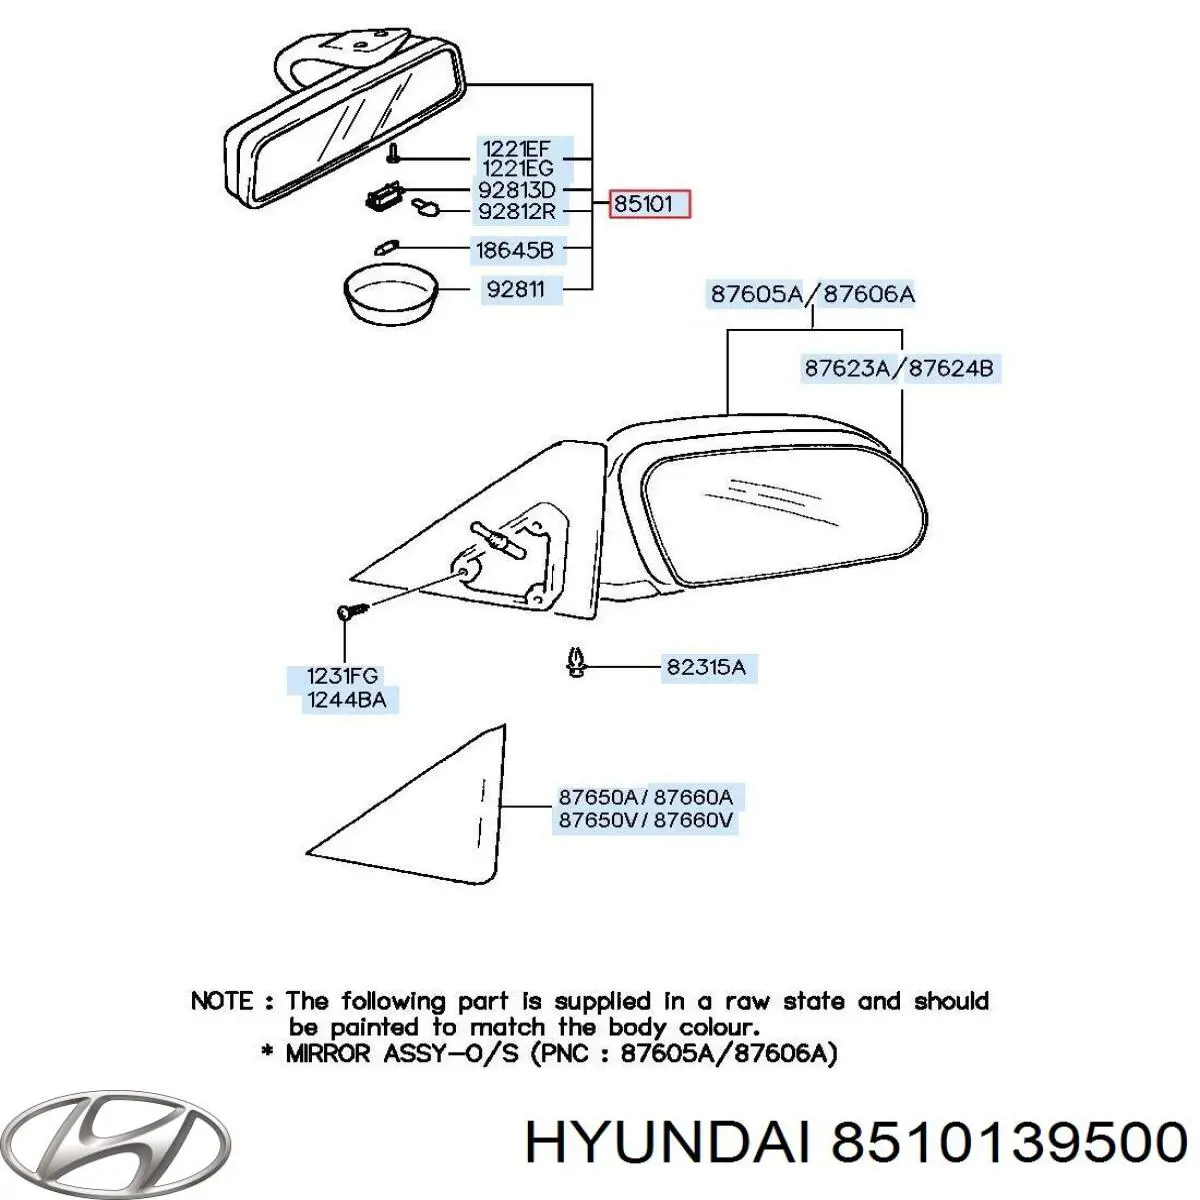 8510139500 Hyundai/Kia retrovisor interior